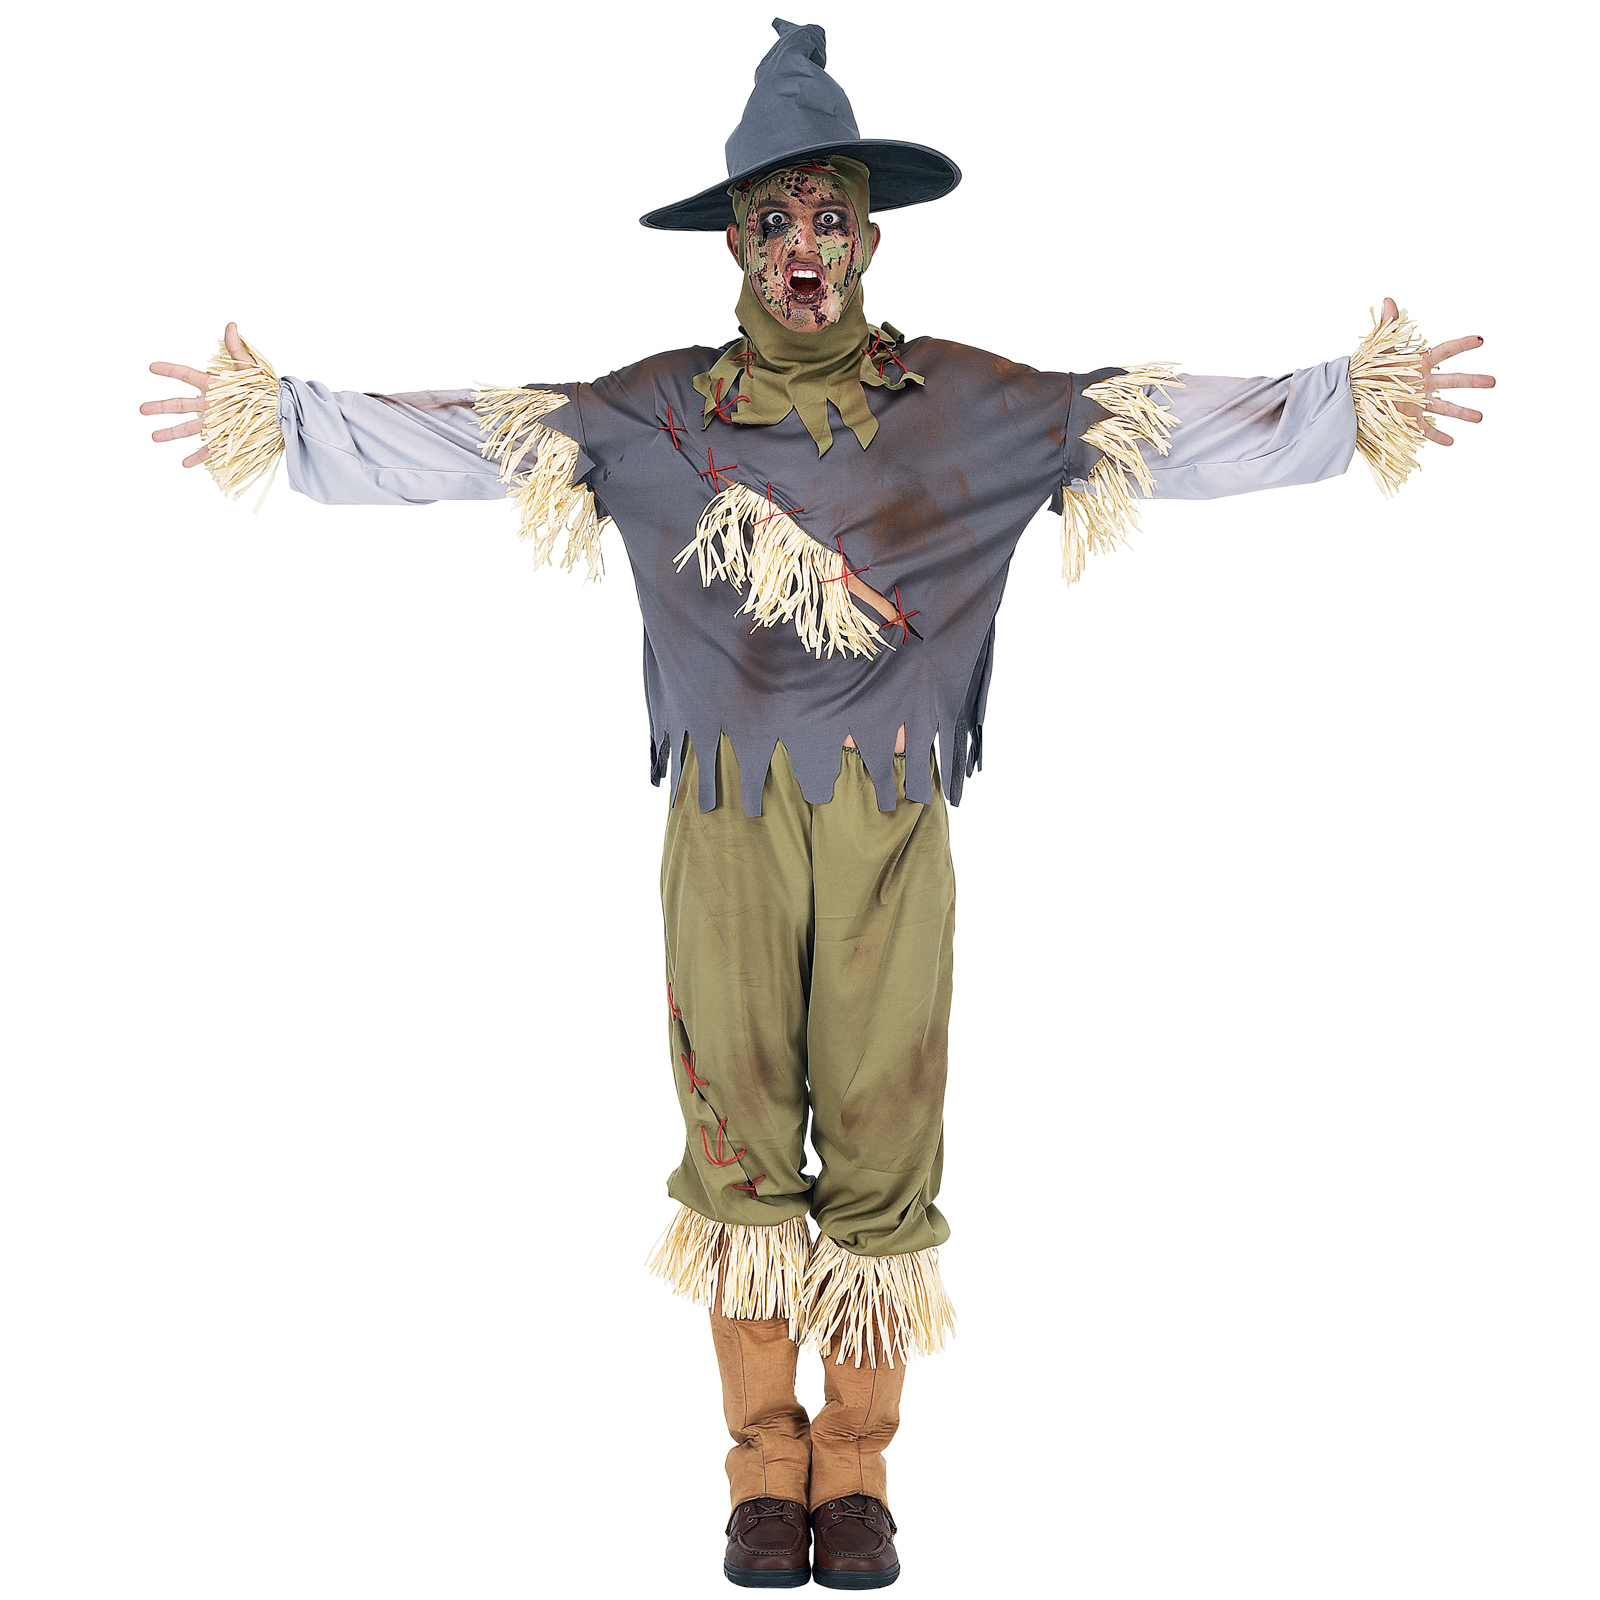 homemade scarecrow costume - kamaci images - Blog.hr